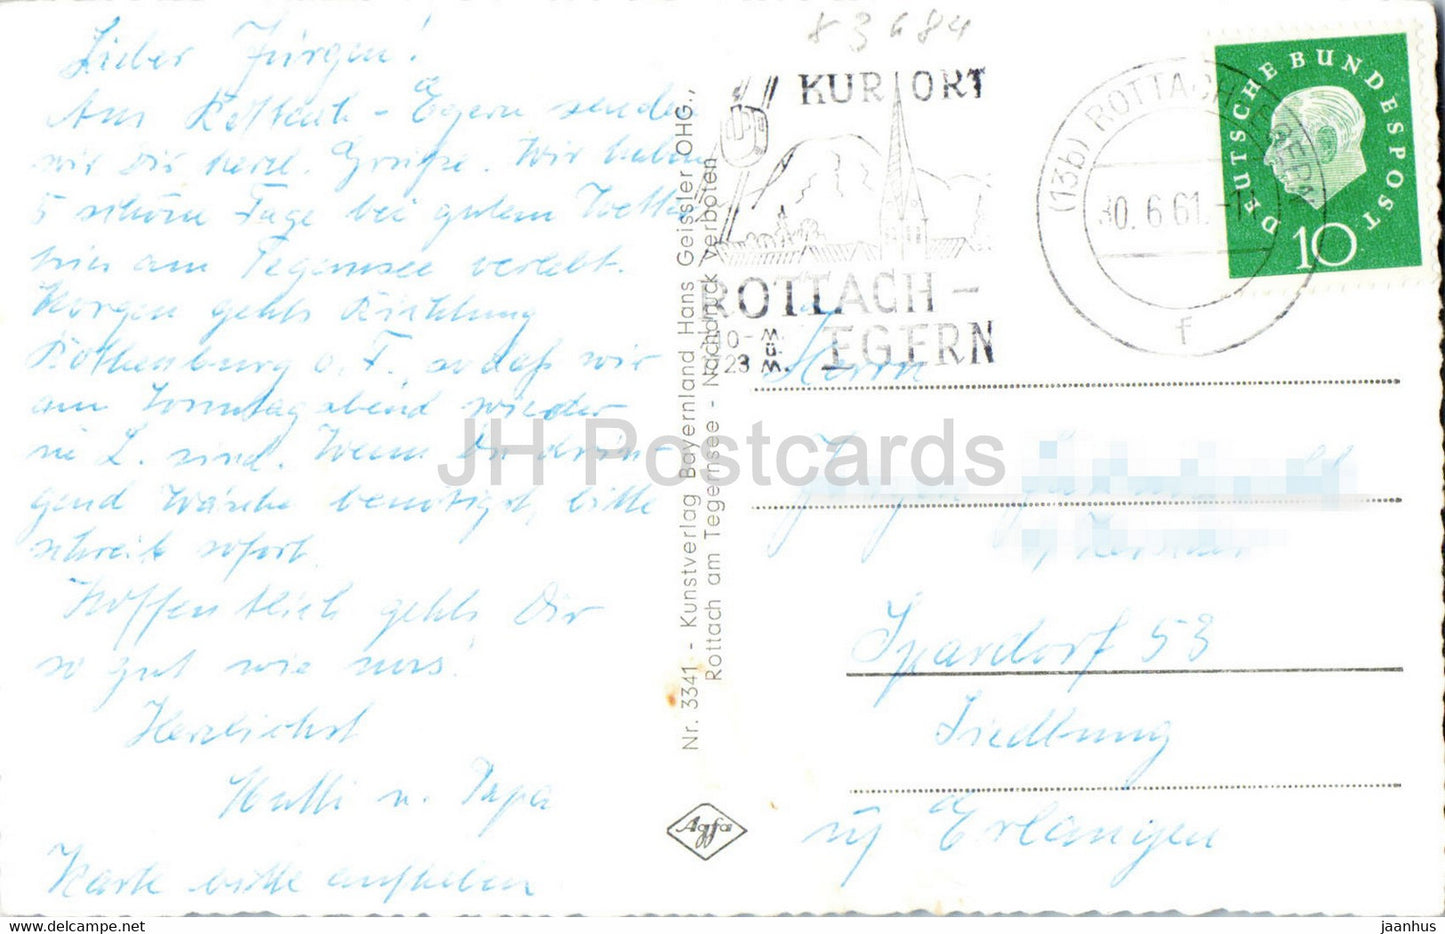 Tegernseer Tal - Bad Wiessee - Rottach Egern - Baumgarten - Brecherspitz - old postcard - 1961 - Germany - used